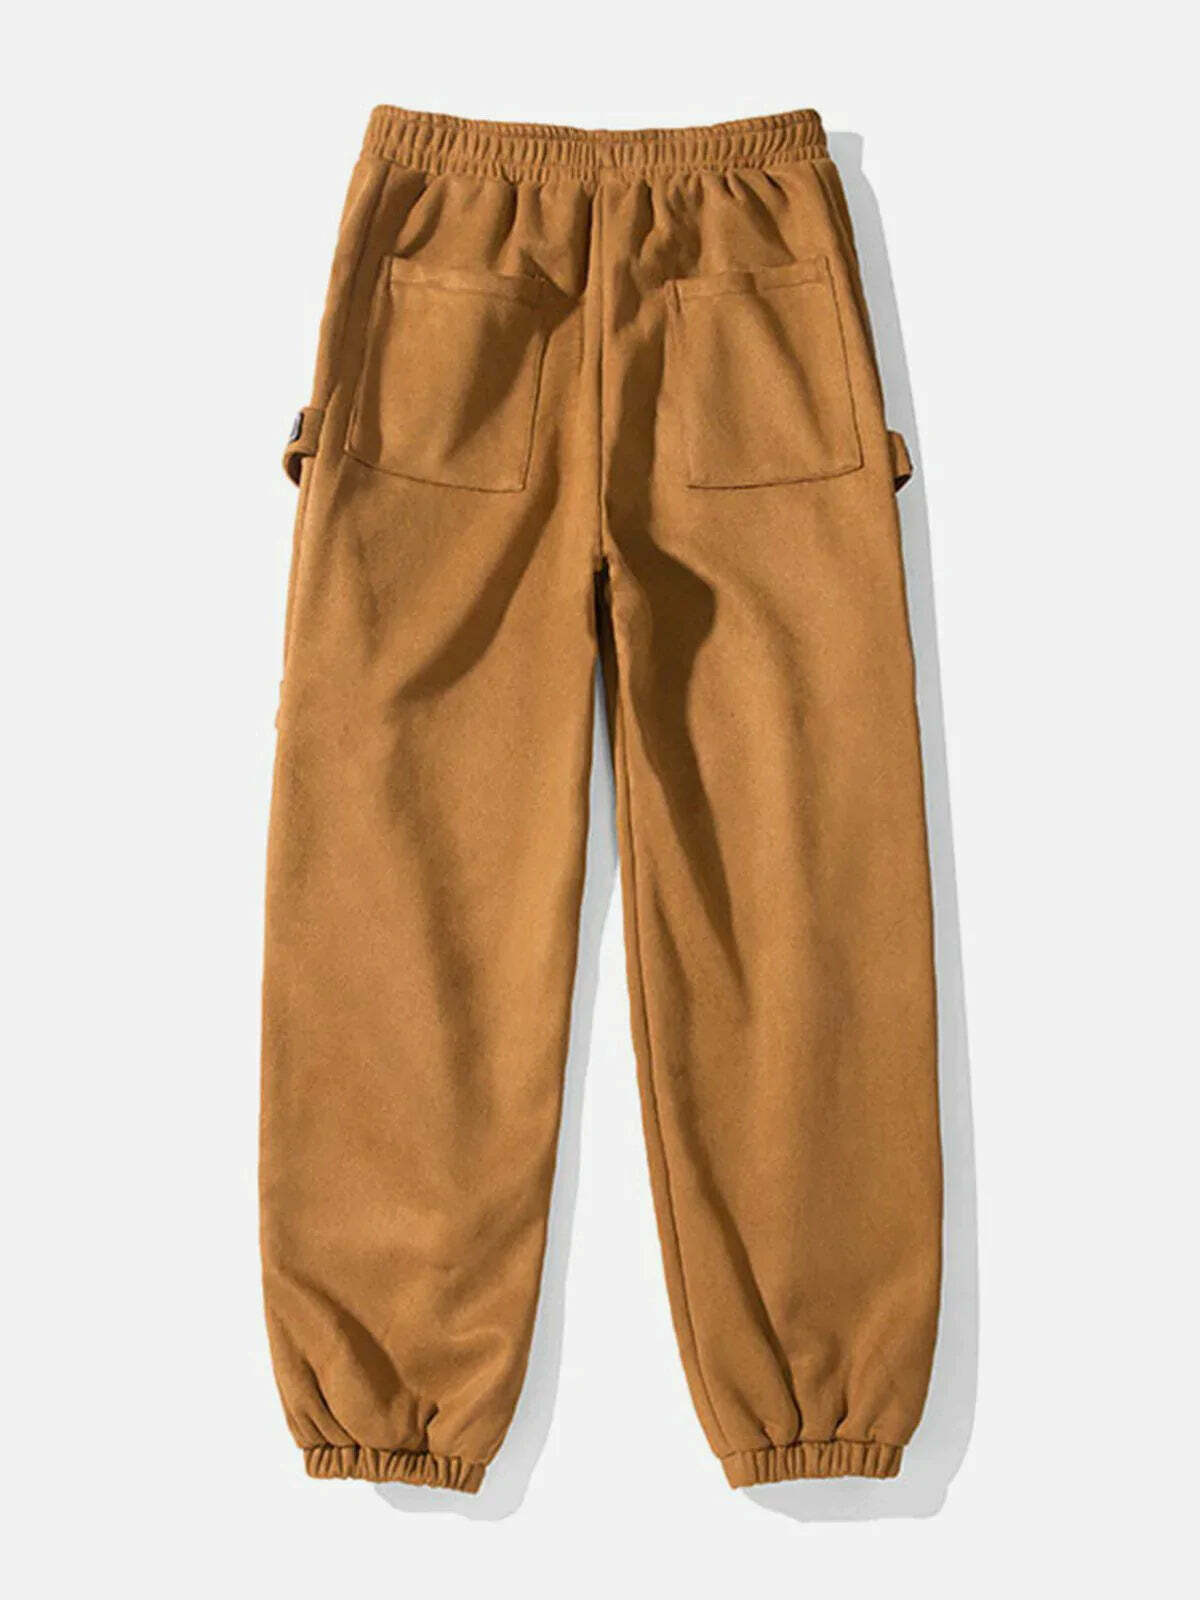 custom suede sweatpants labeled design & urban style 1210